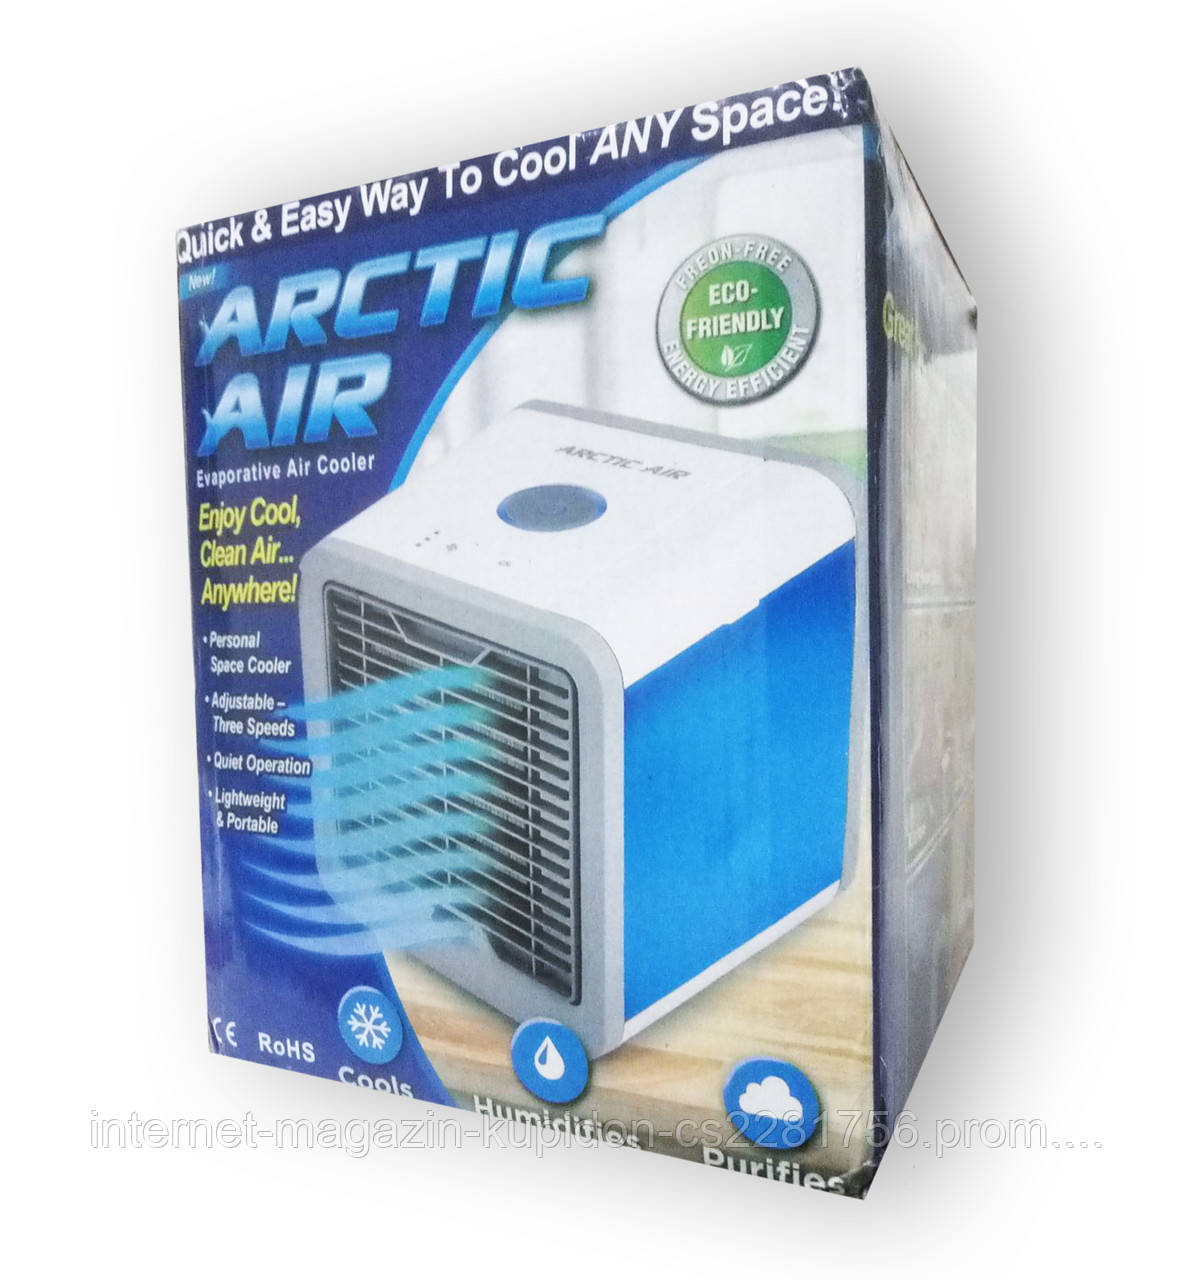 ARCTIC AIR - Портативный мини-кондиционер (Арктик Аир)